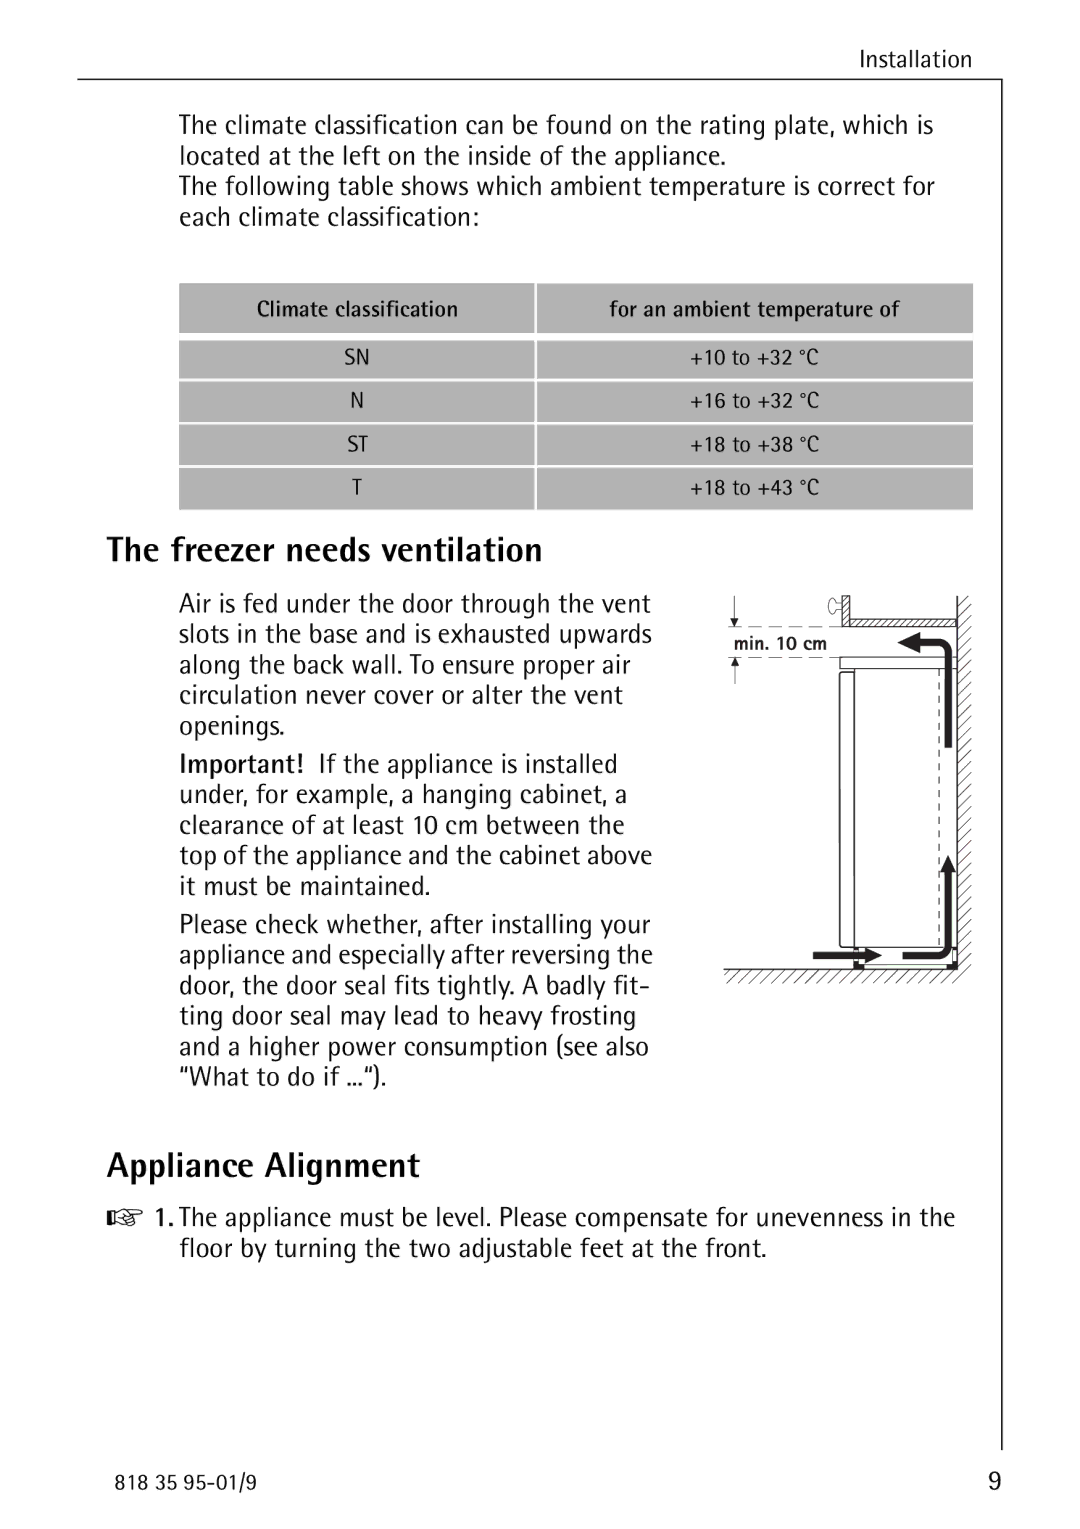 AEG 75248 GA1 manual Freezer needs ventilation, Appliance Alignment 